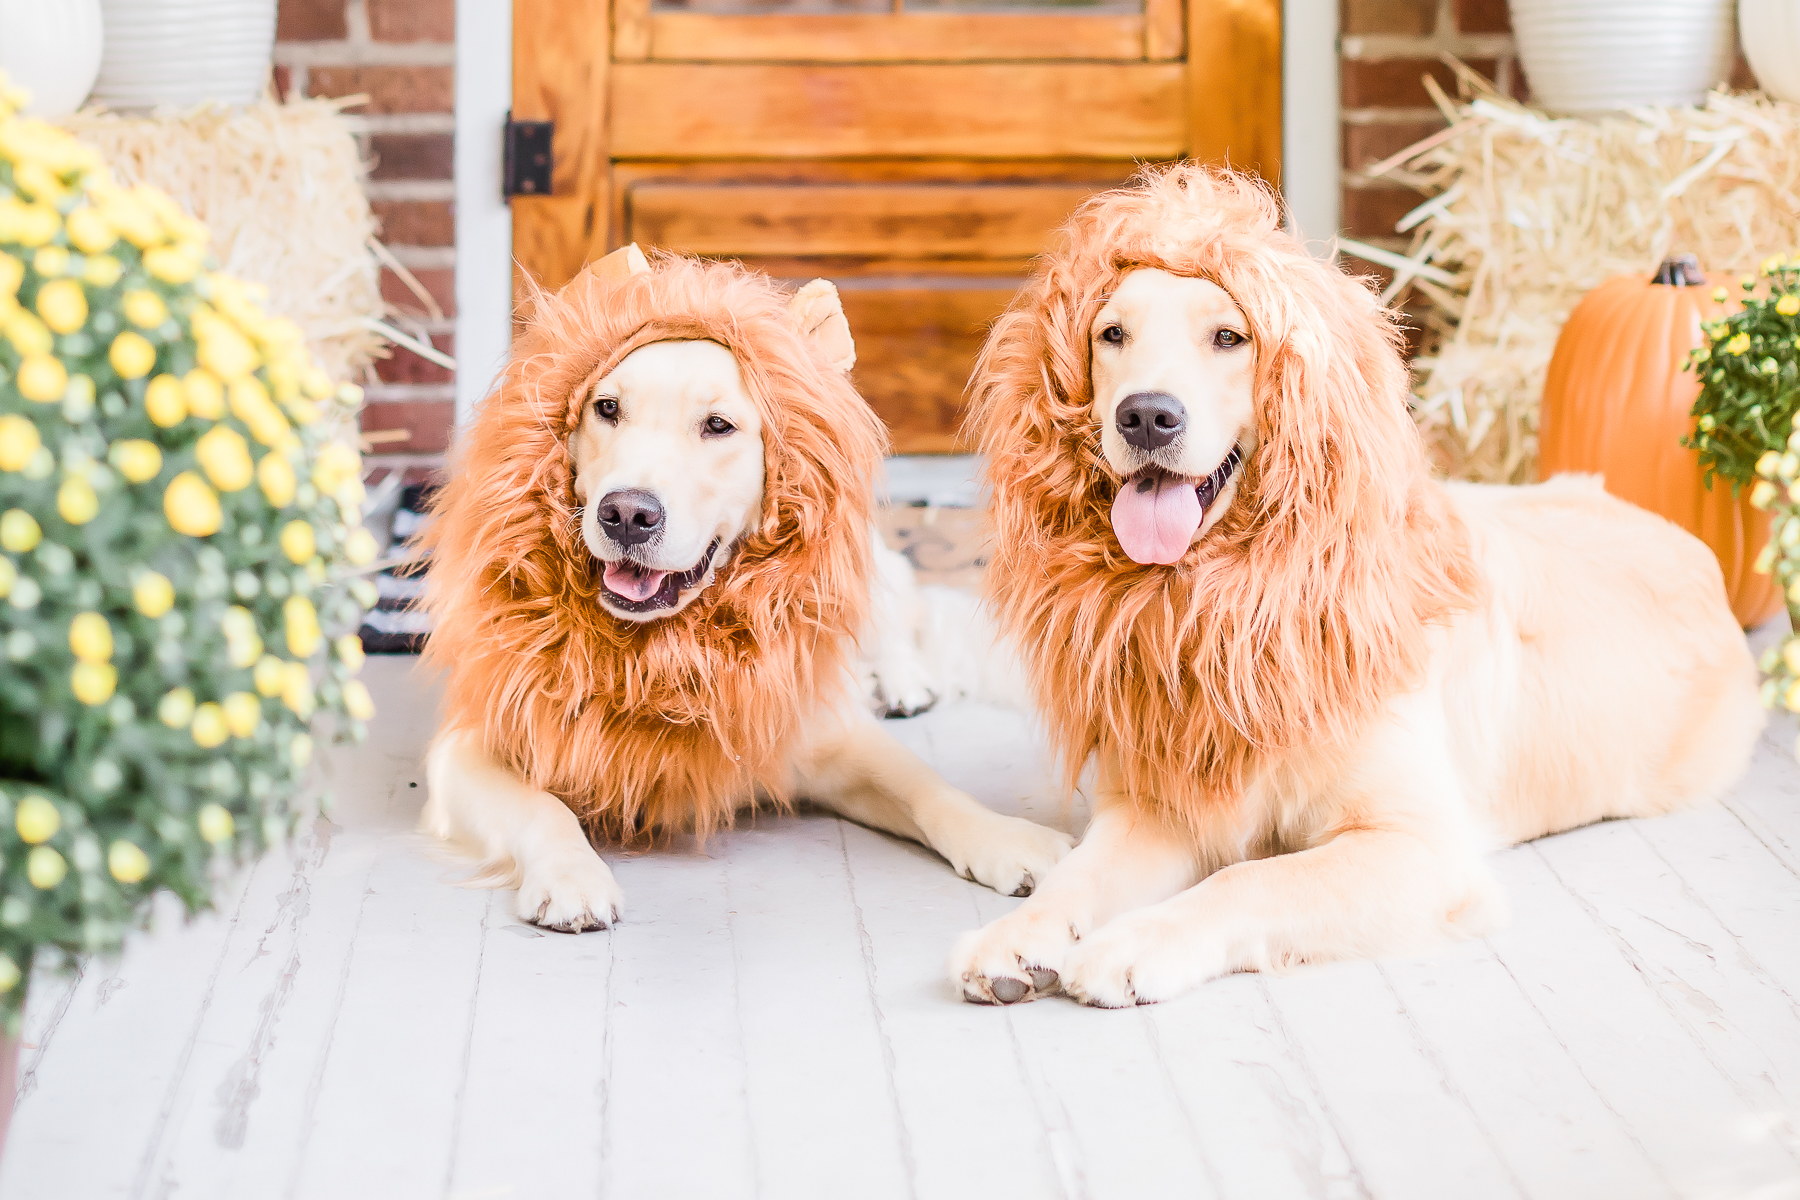 Dog lion mane costume, golden retriever lion mane costume, cute dog costumes